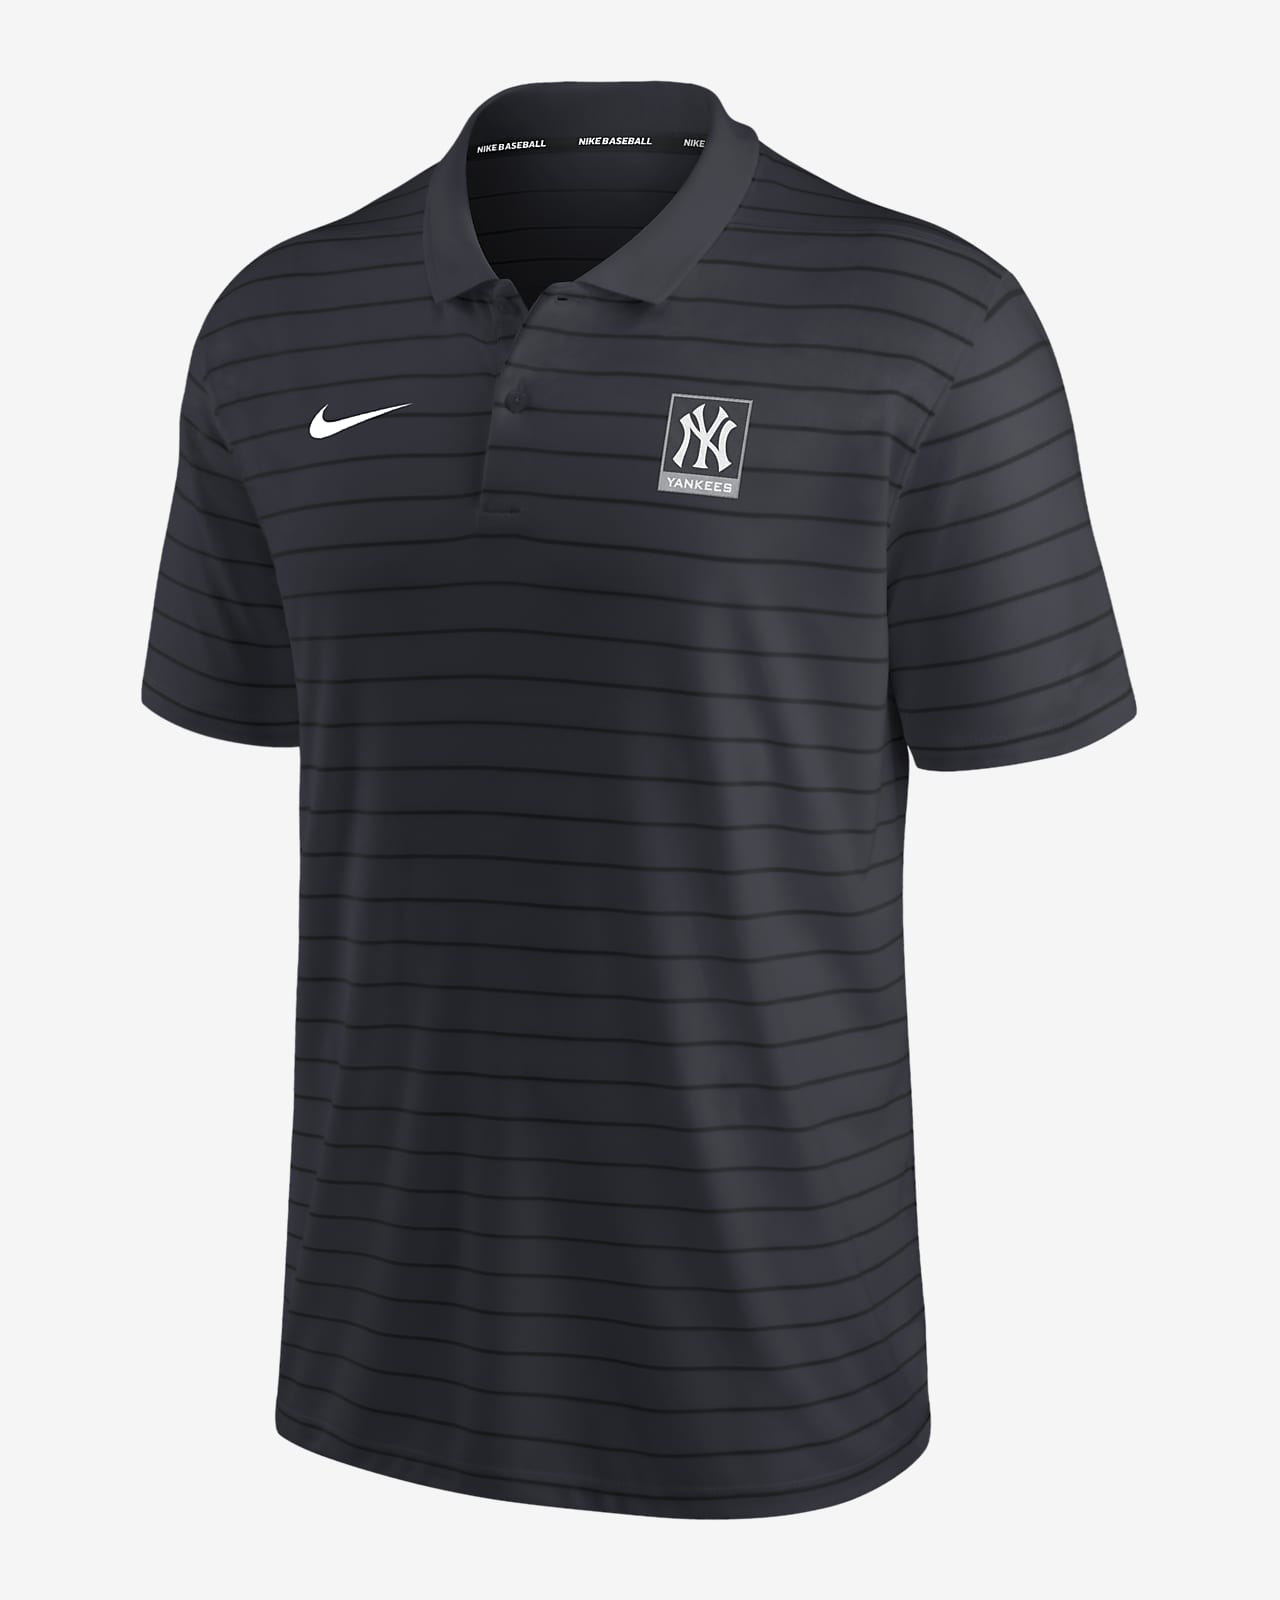 Nike Dri-FIT Striped (MLB New York Yankees) Men's Polo. Nike.com